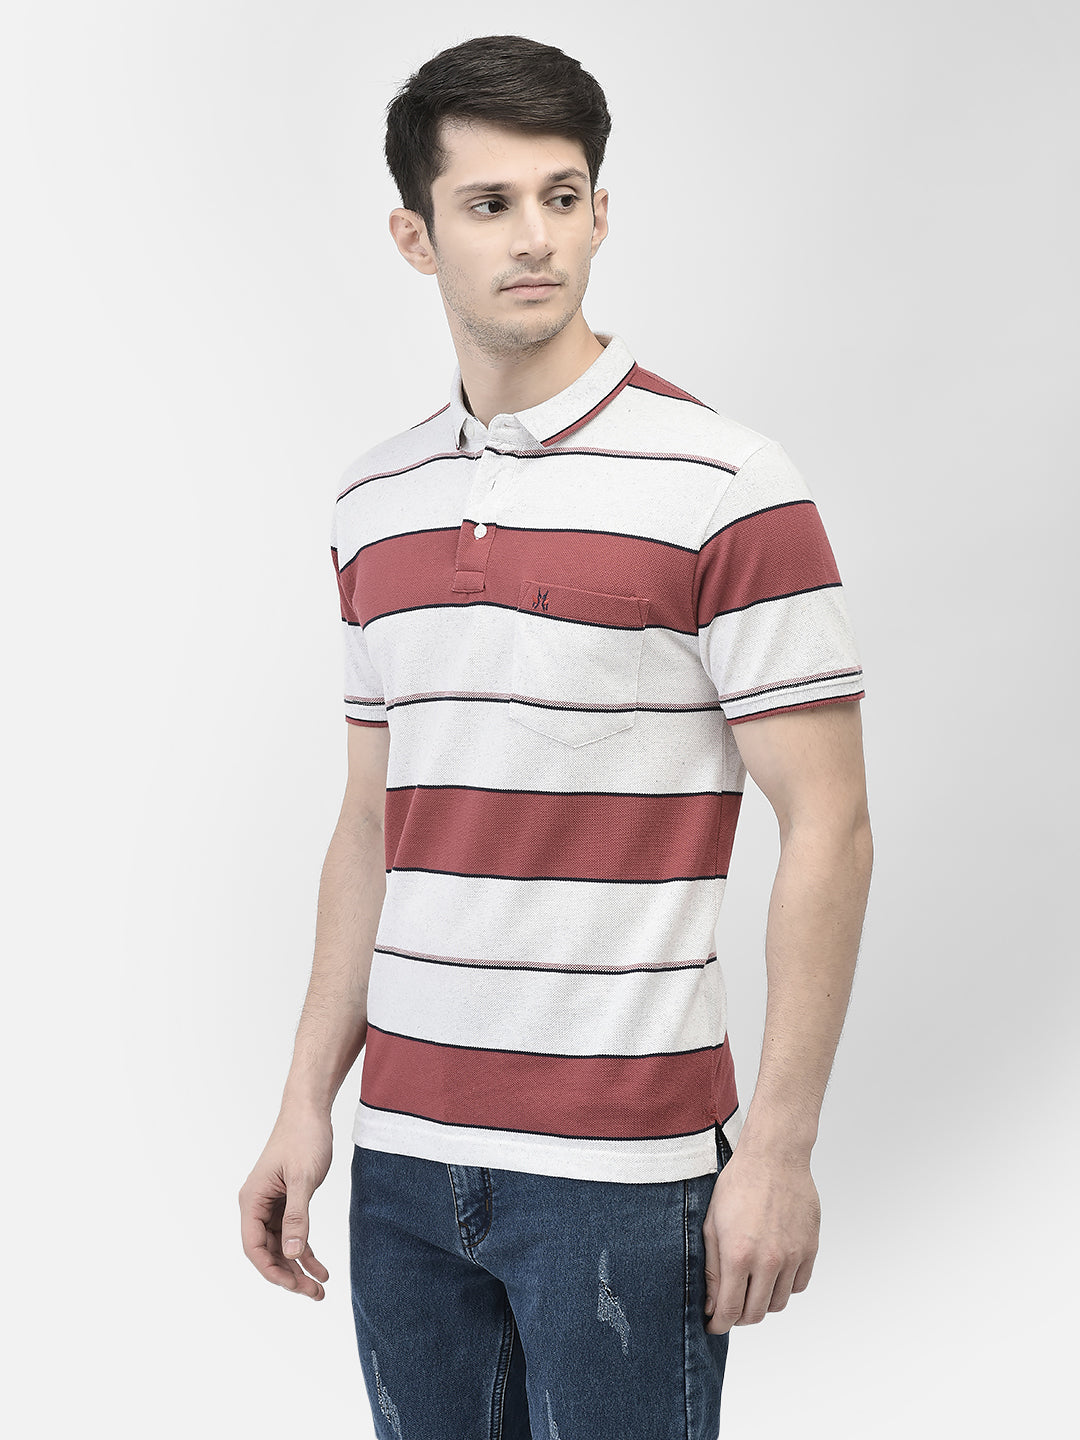 Red Striped T-shirt-Men T-shirts-Crimsoune Club